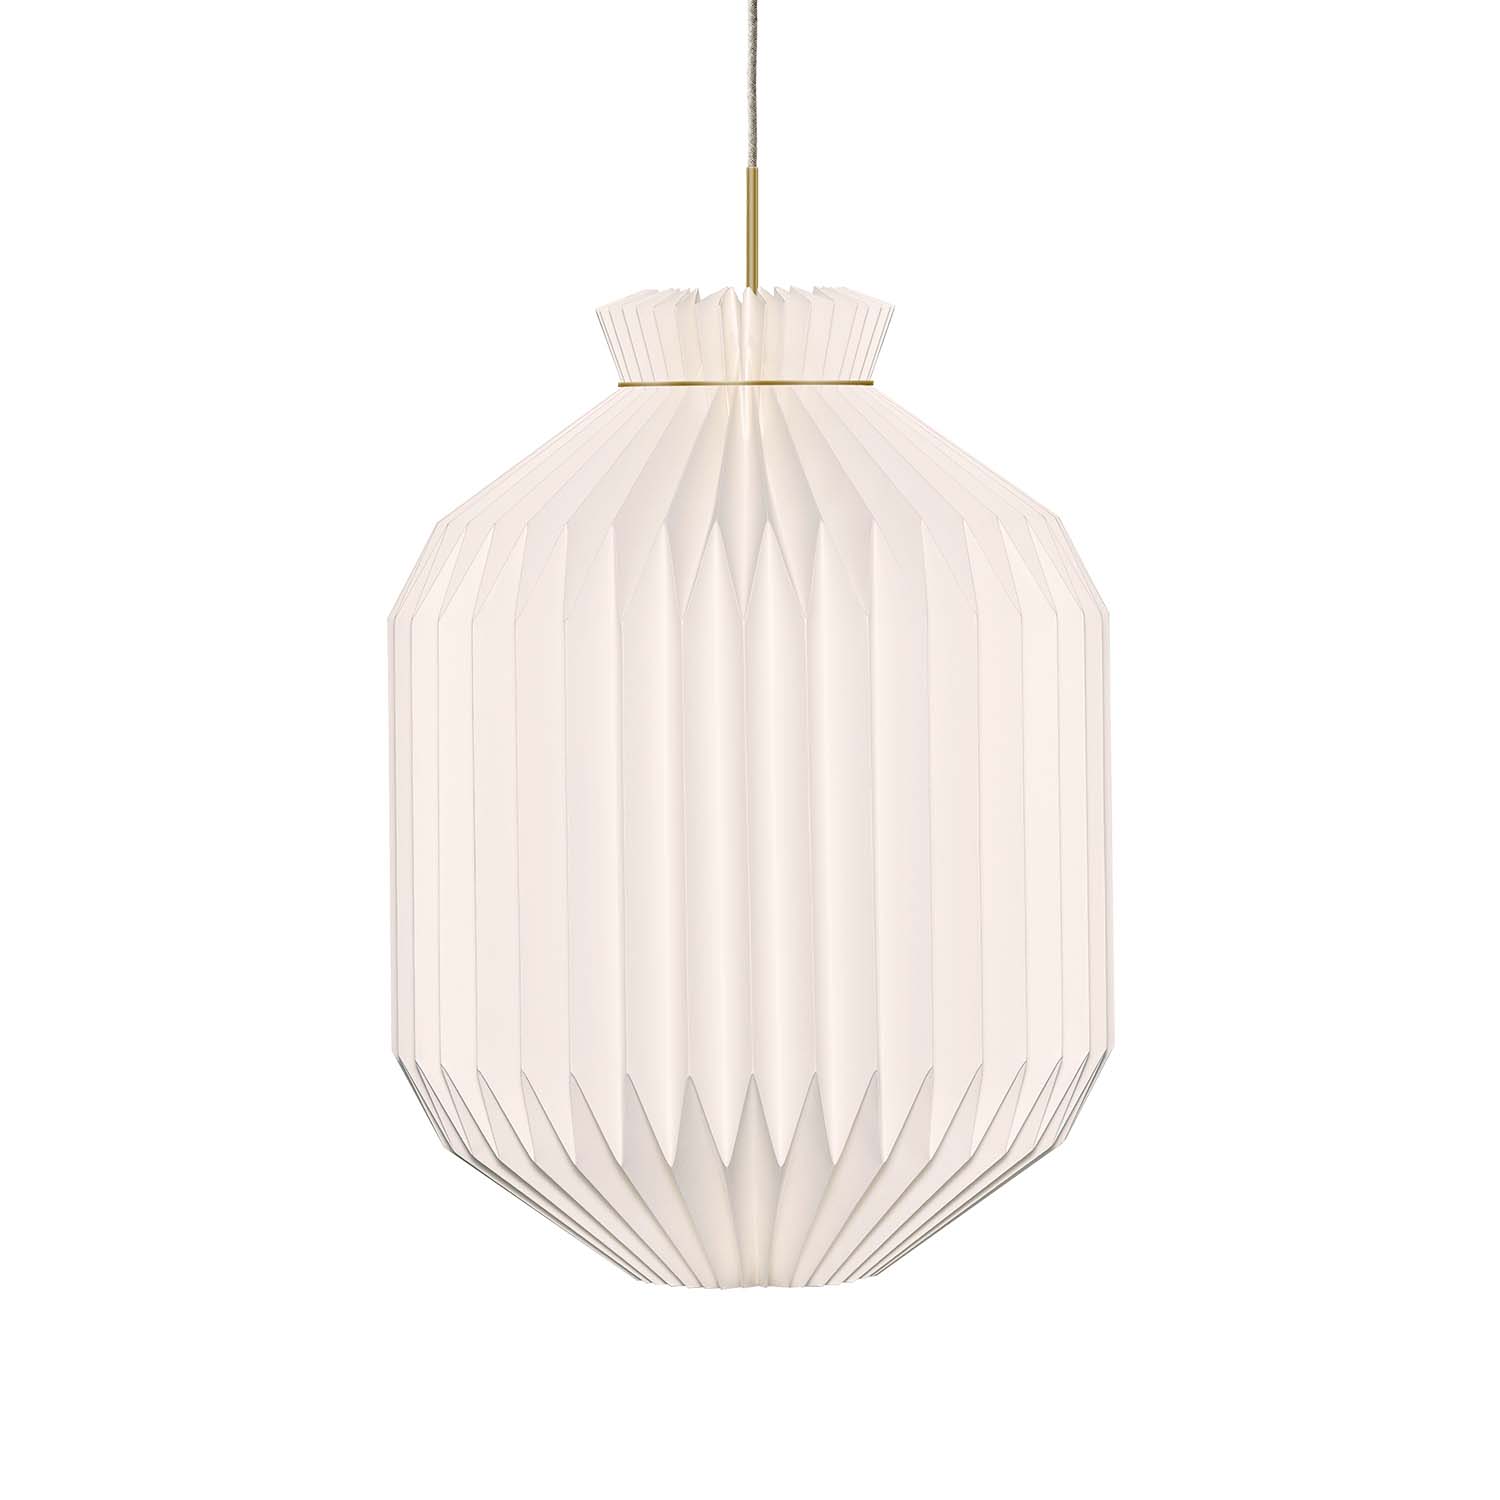 CLASSIC 105 - Handcrafted white pleated design lantern pendant light